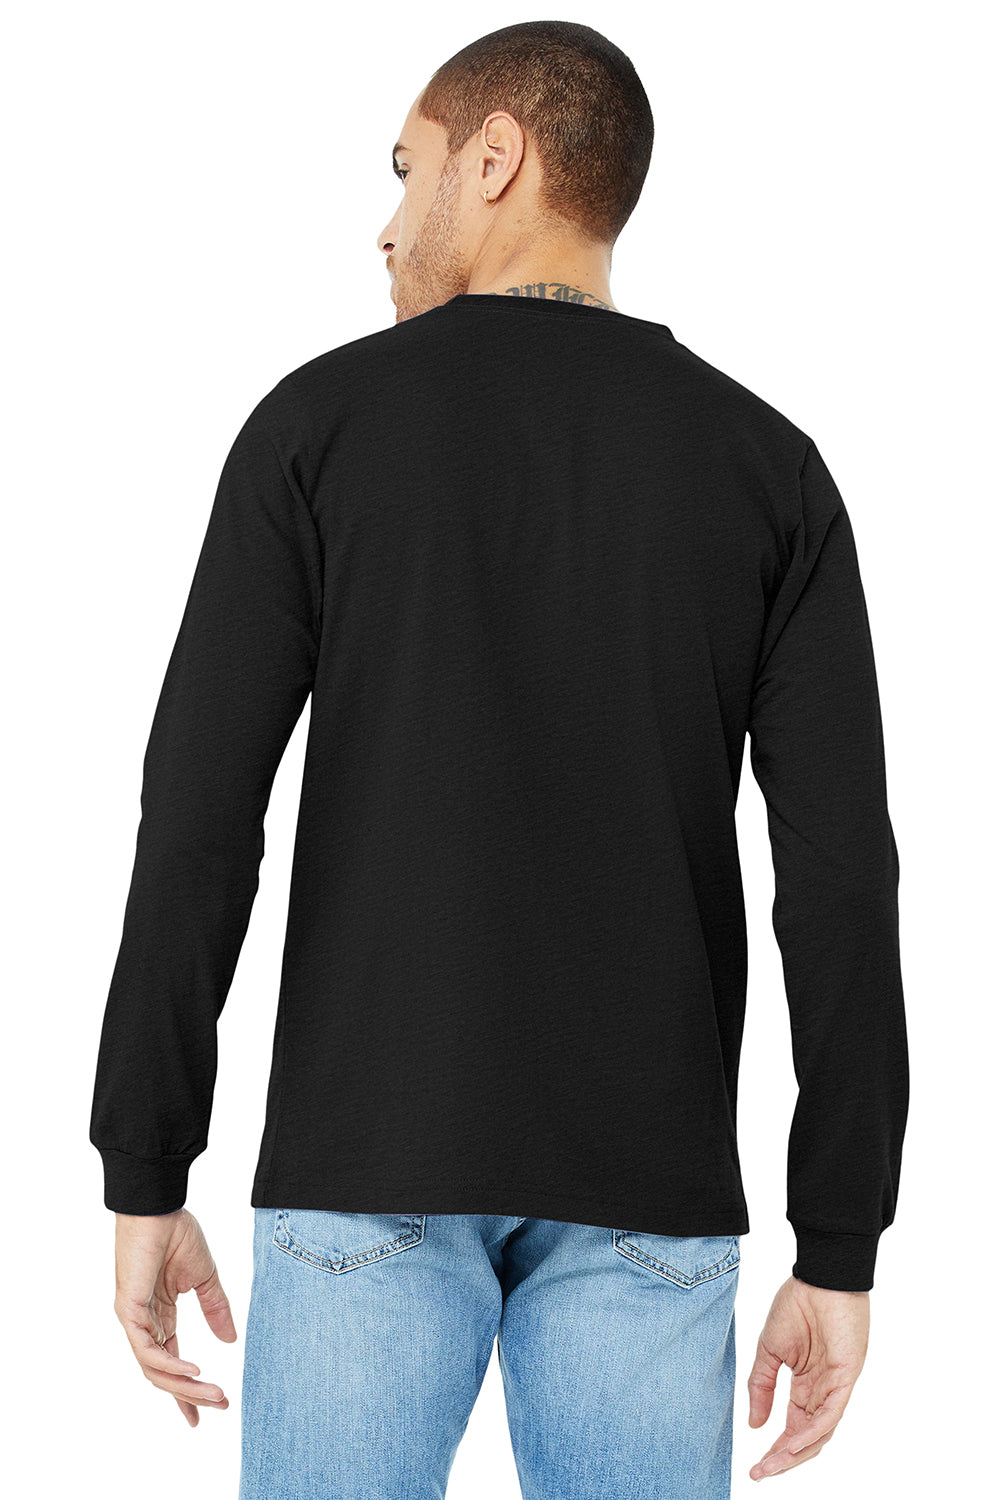 Bella + Canvas BC3501/3501 Mens Jersey Long Sleeve Crewneck T-Shirt Solid Black Triblend Model Back